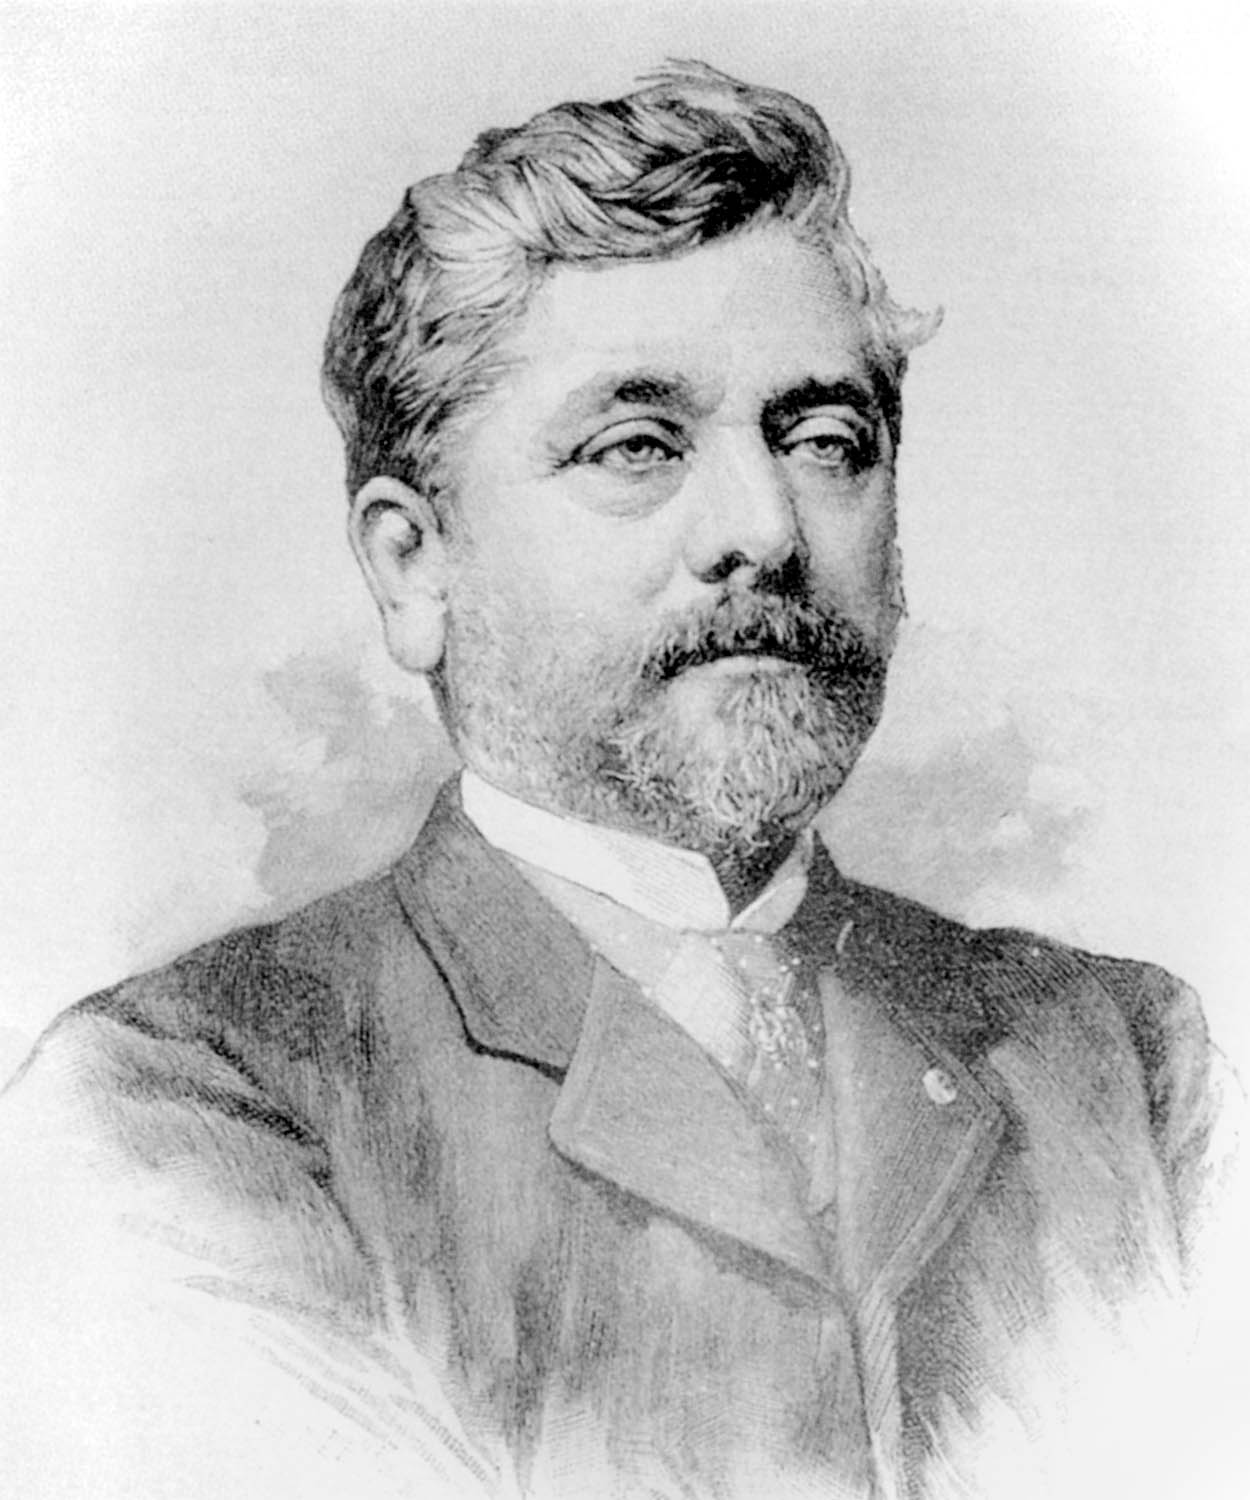  Biografie van Gustave Eiffel